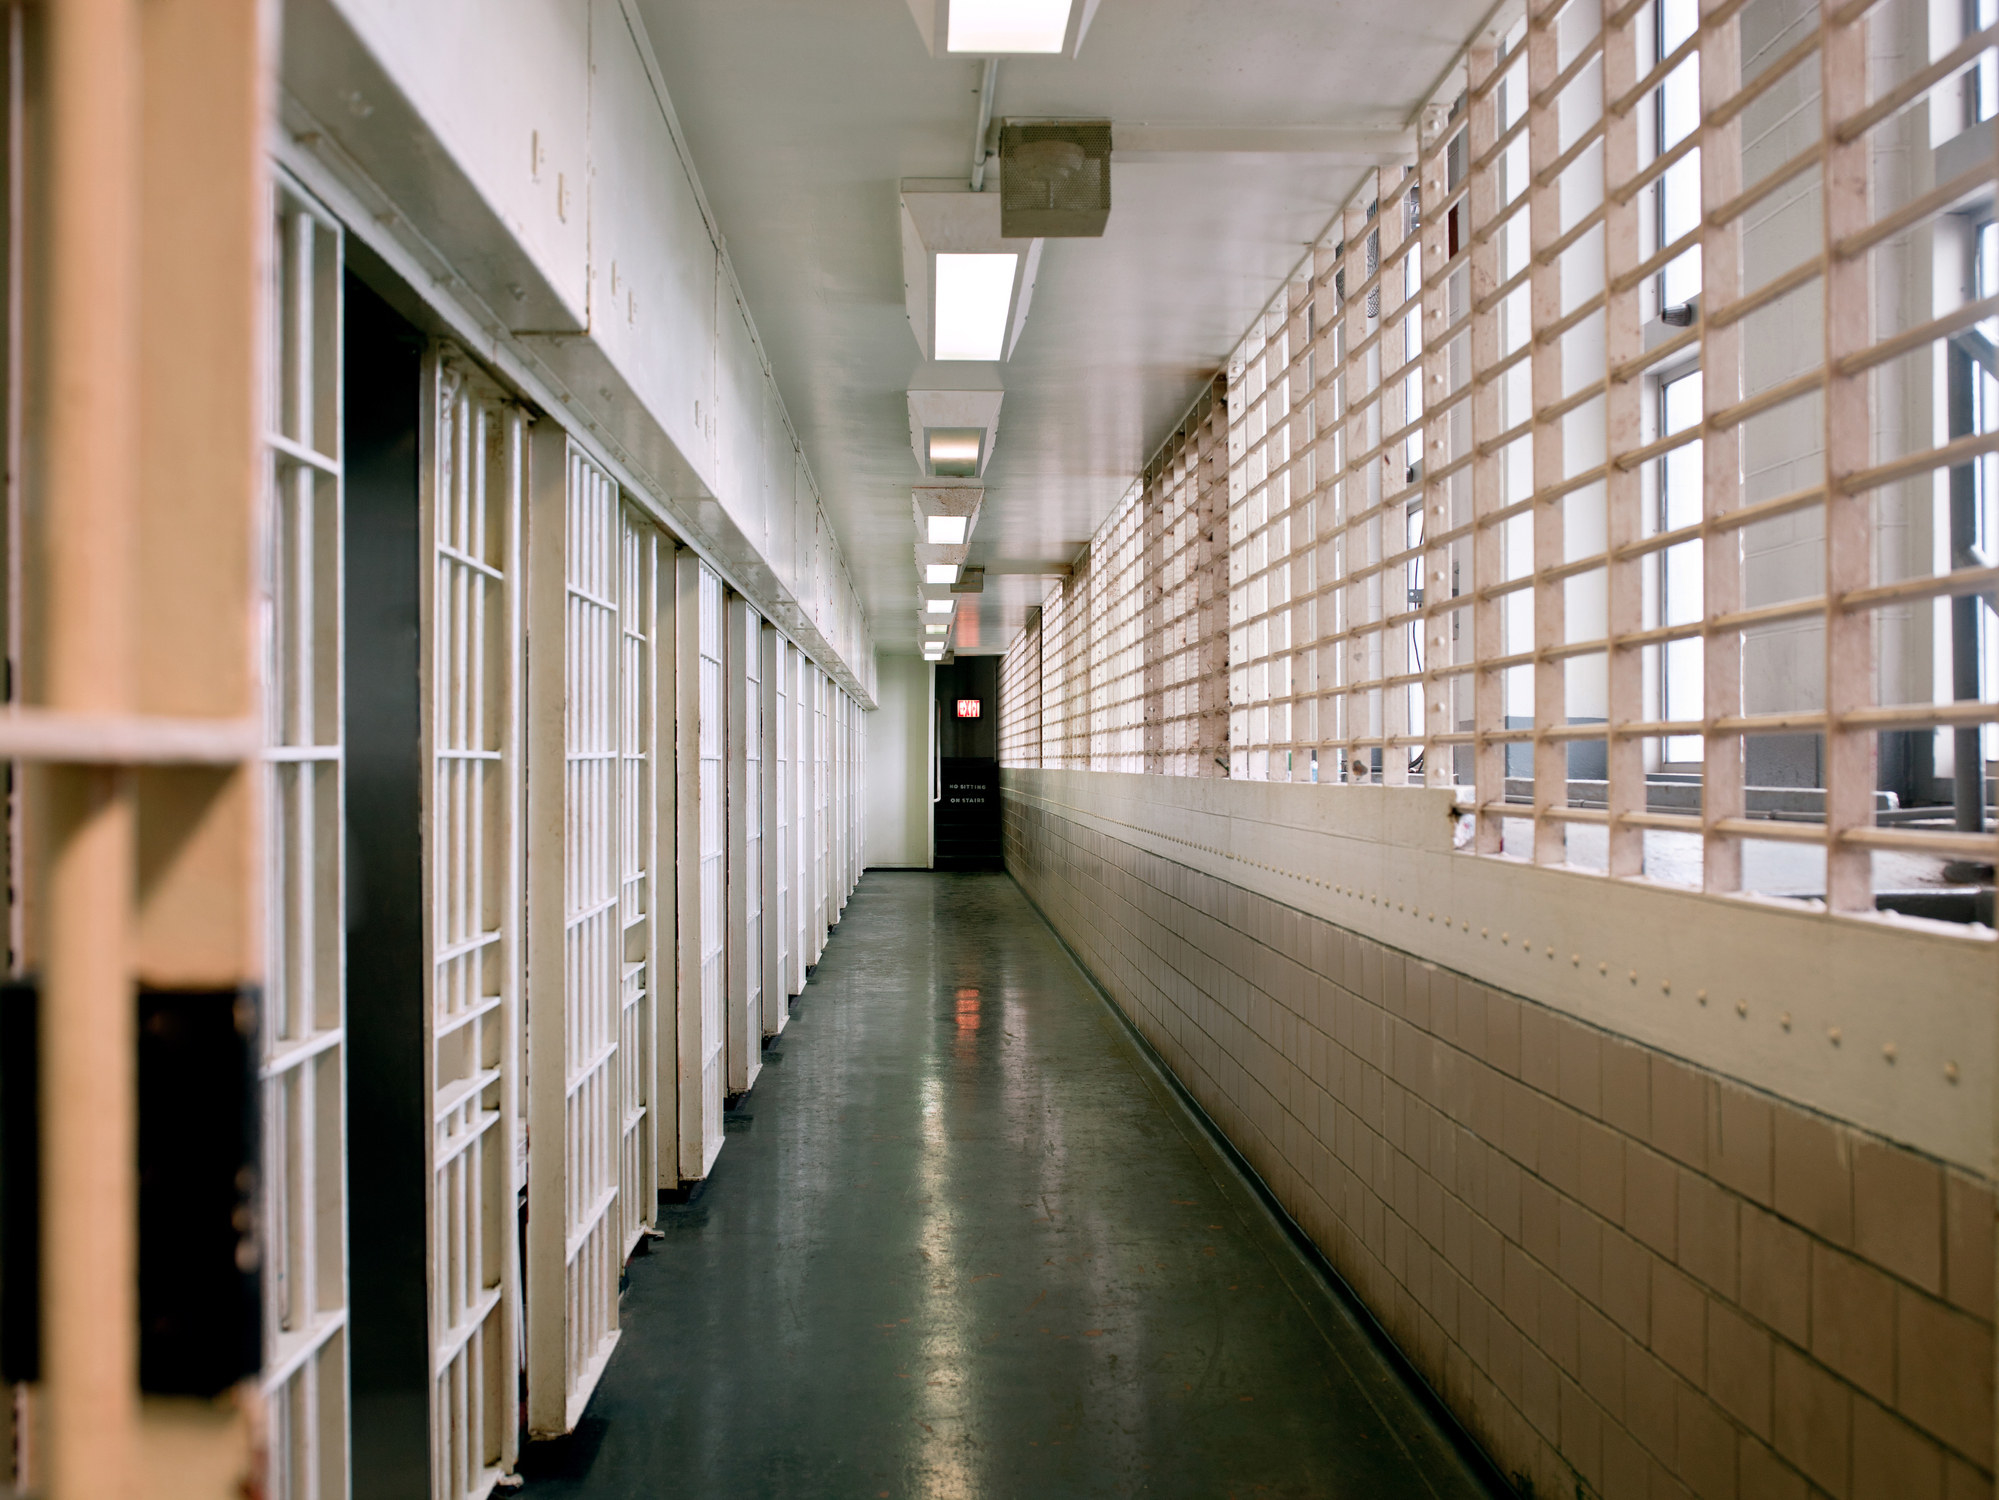 A prison hallway